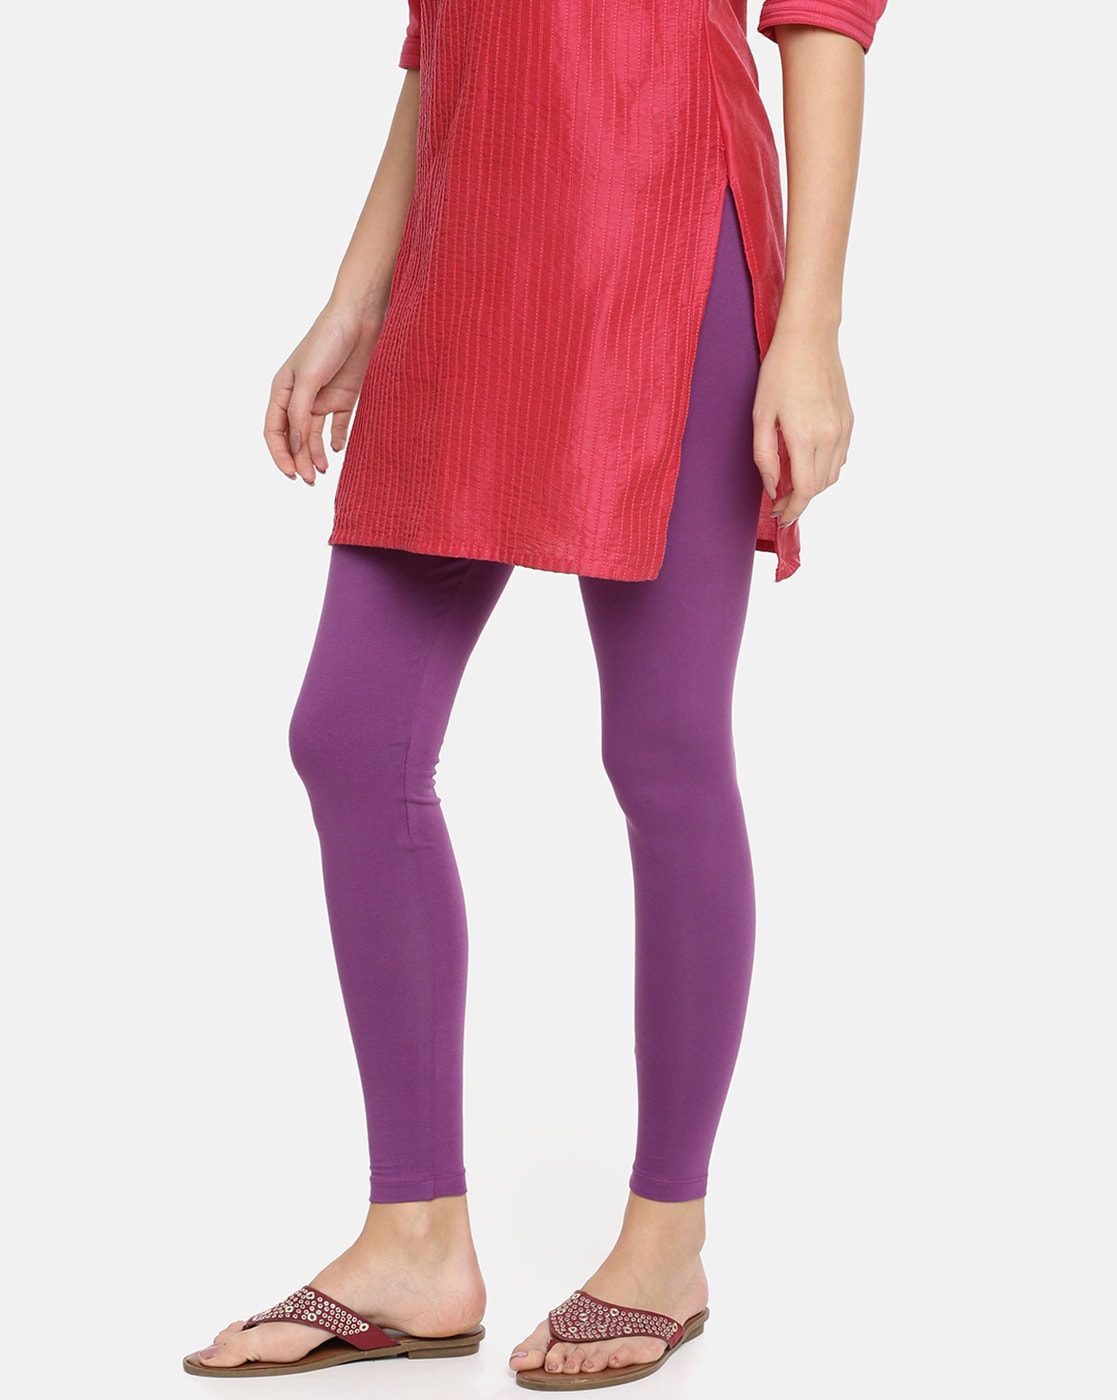 Buy go colors leggings women in India @ Limeroad